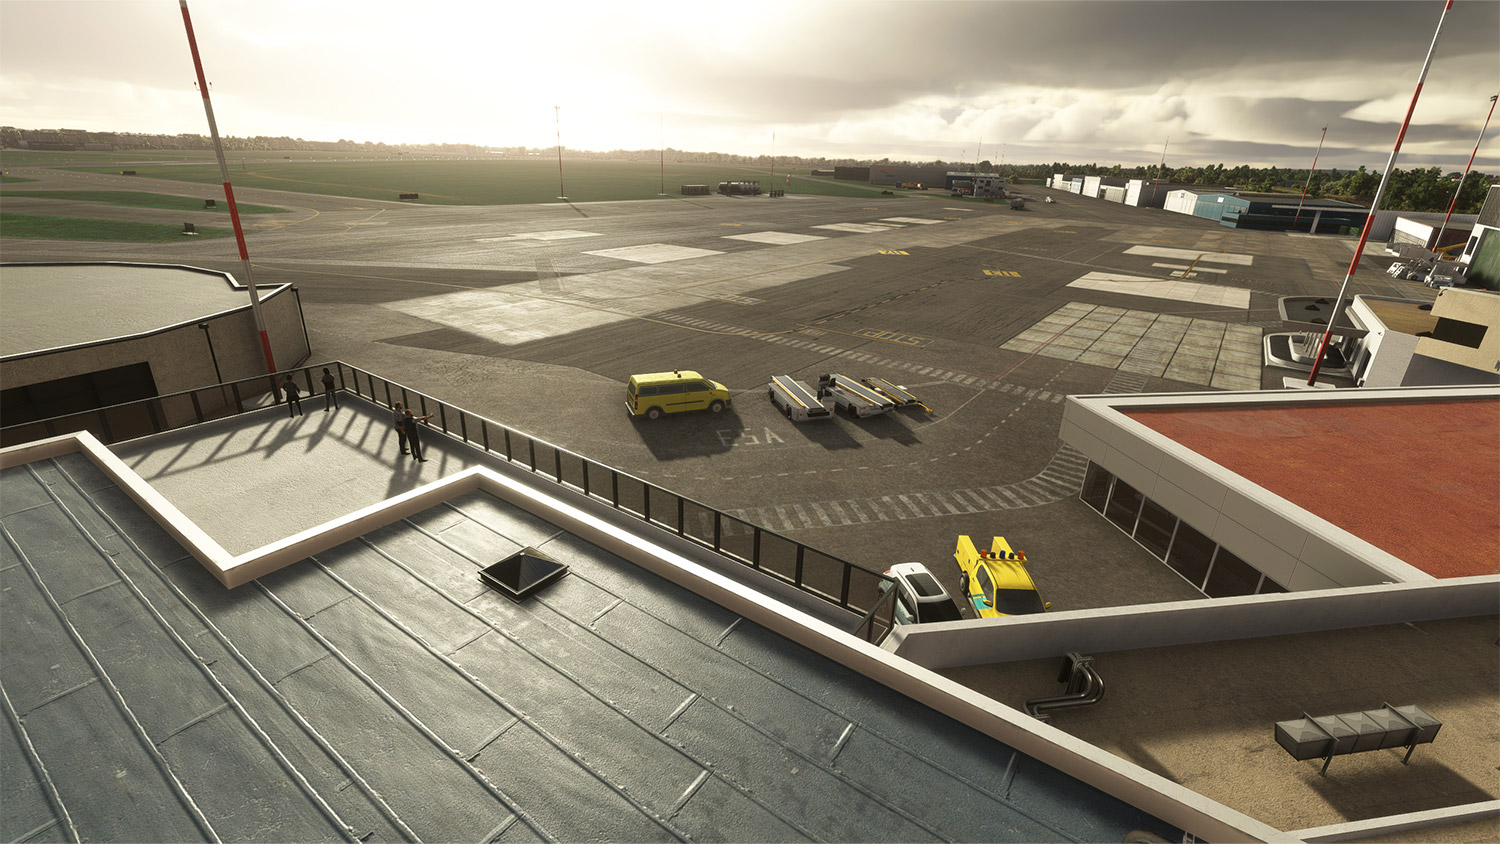 Aerosoft Airport Antwerp